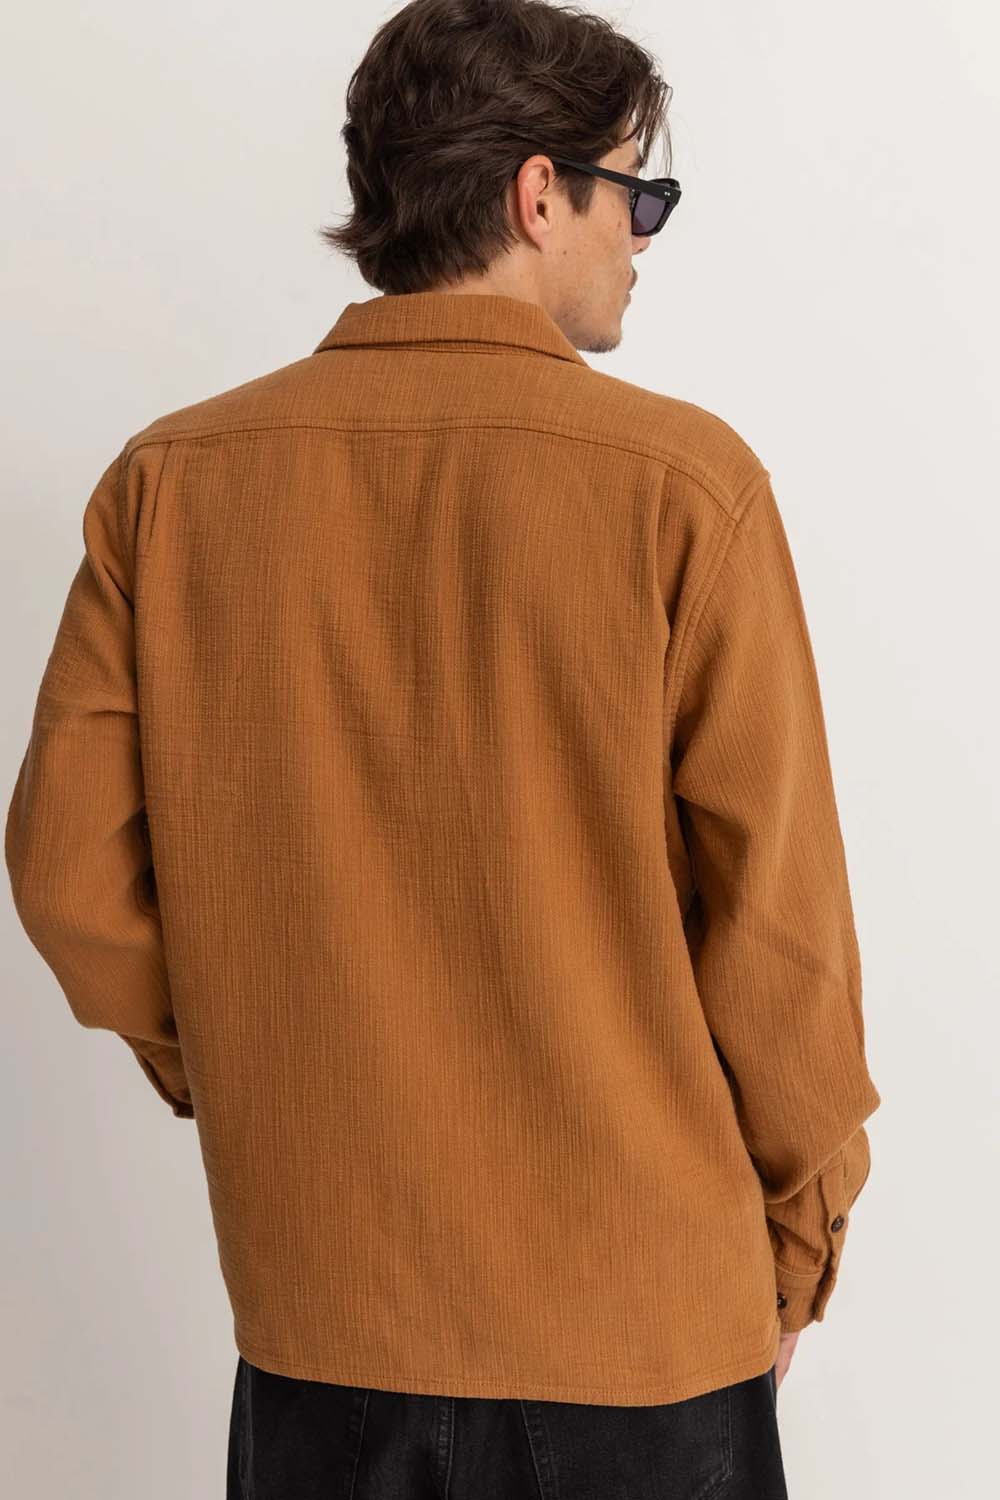 Rhythm - Textured Linen LS Shirt - Tobacco - Back